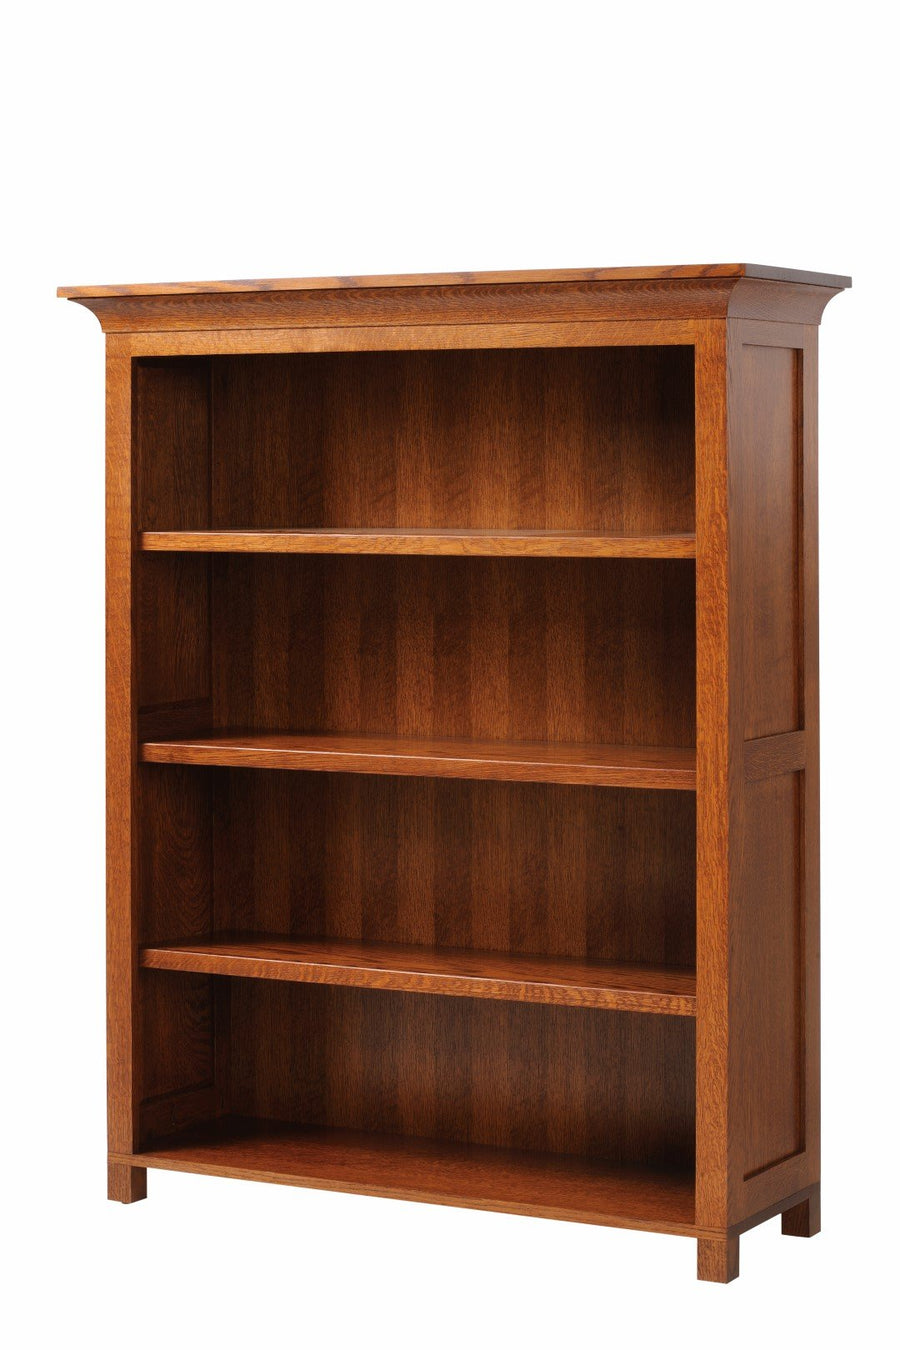 Coventry Amish Bookcase - Charleston Amish Furniture